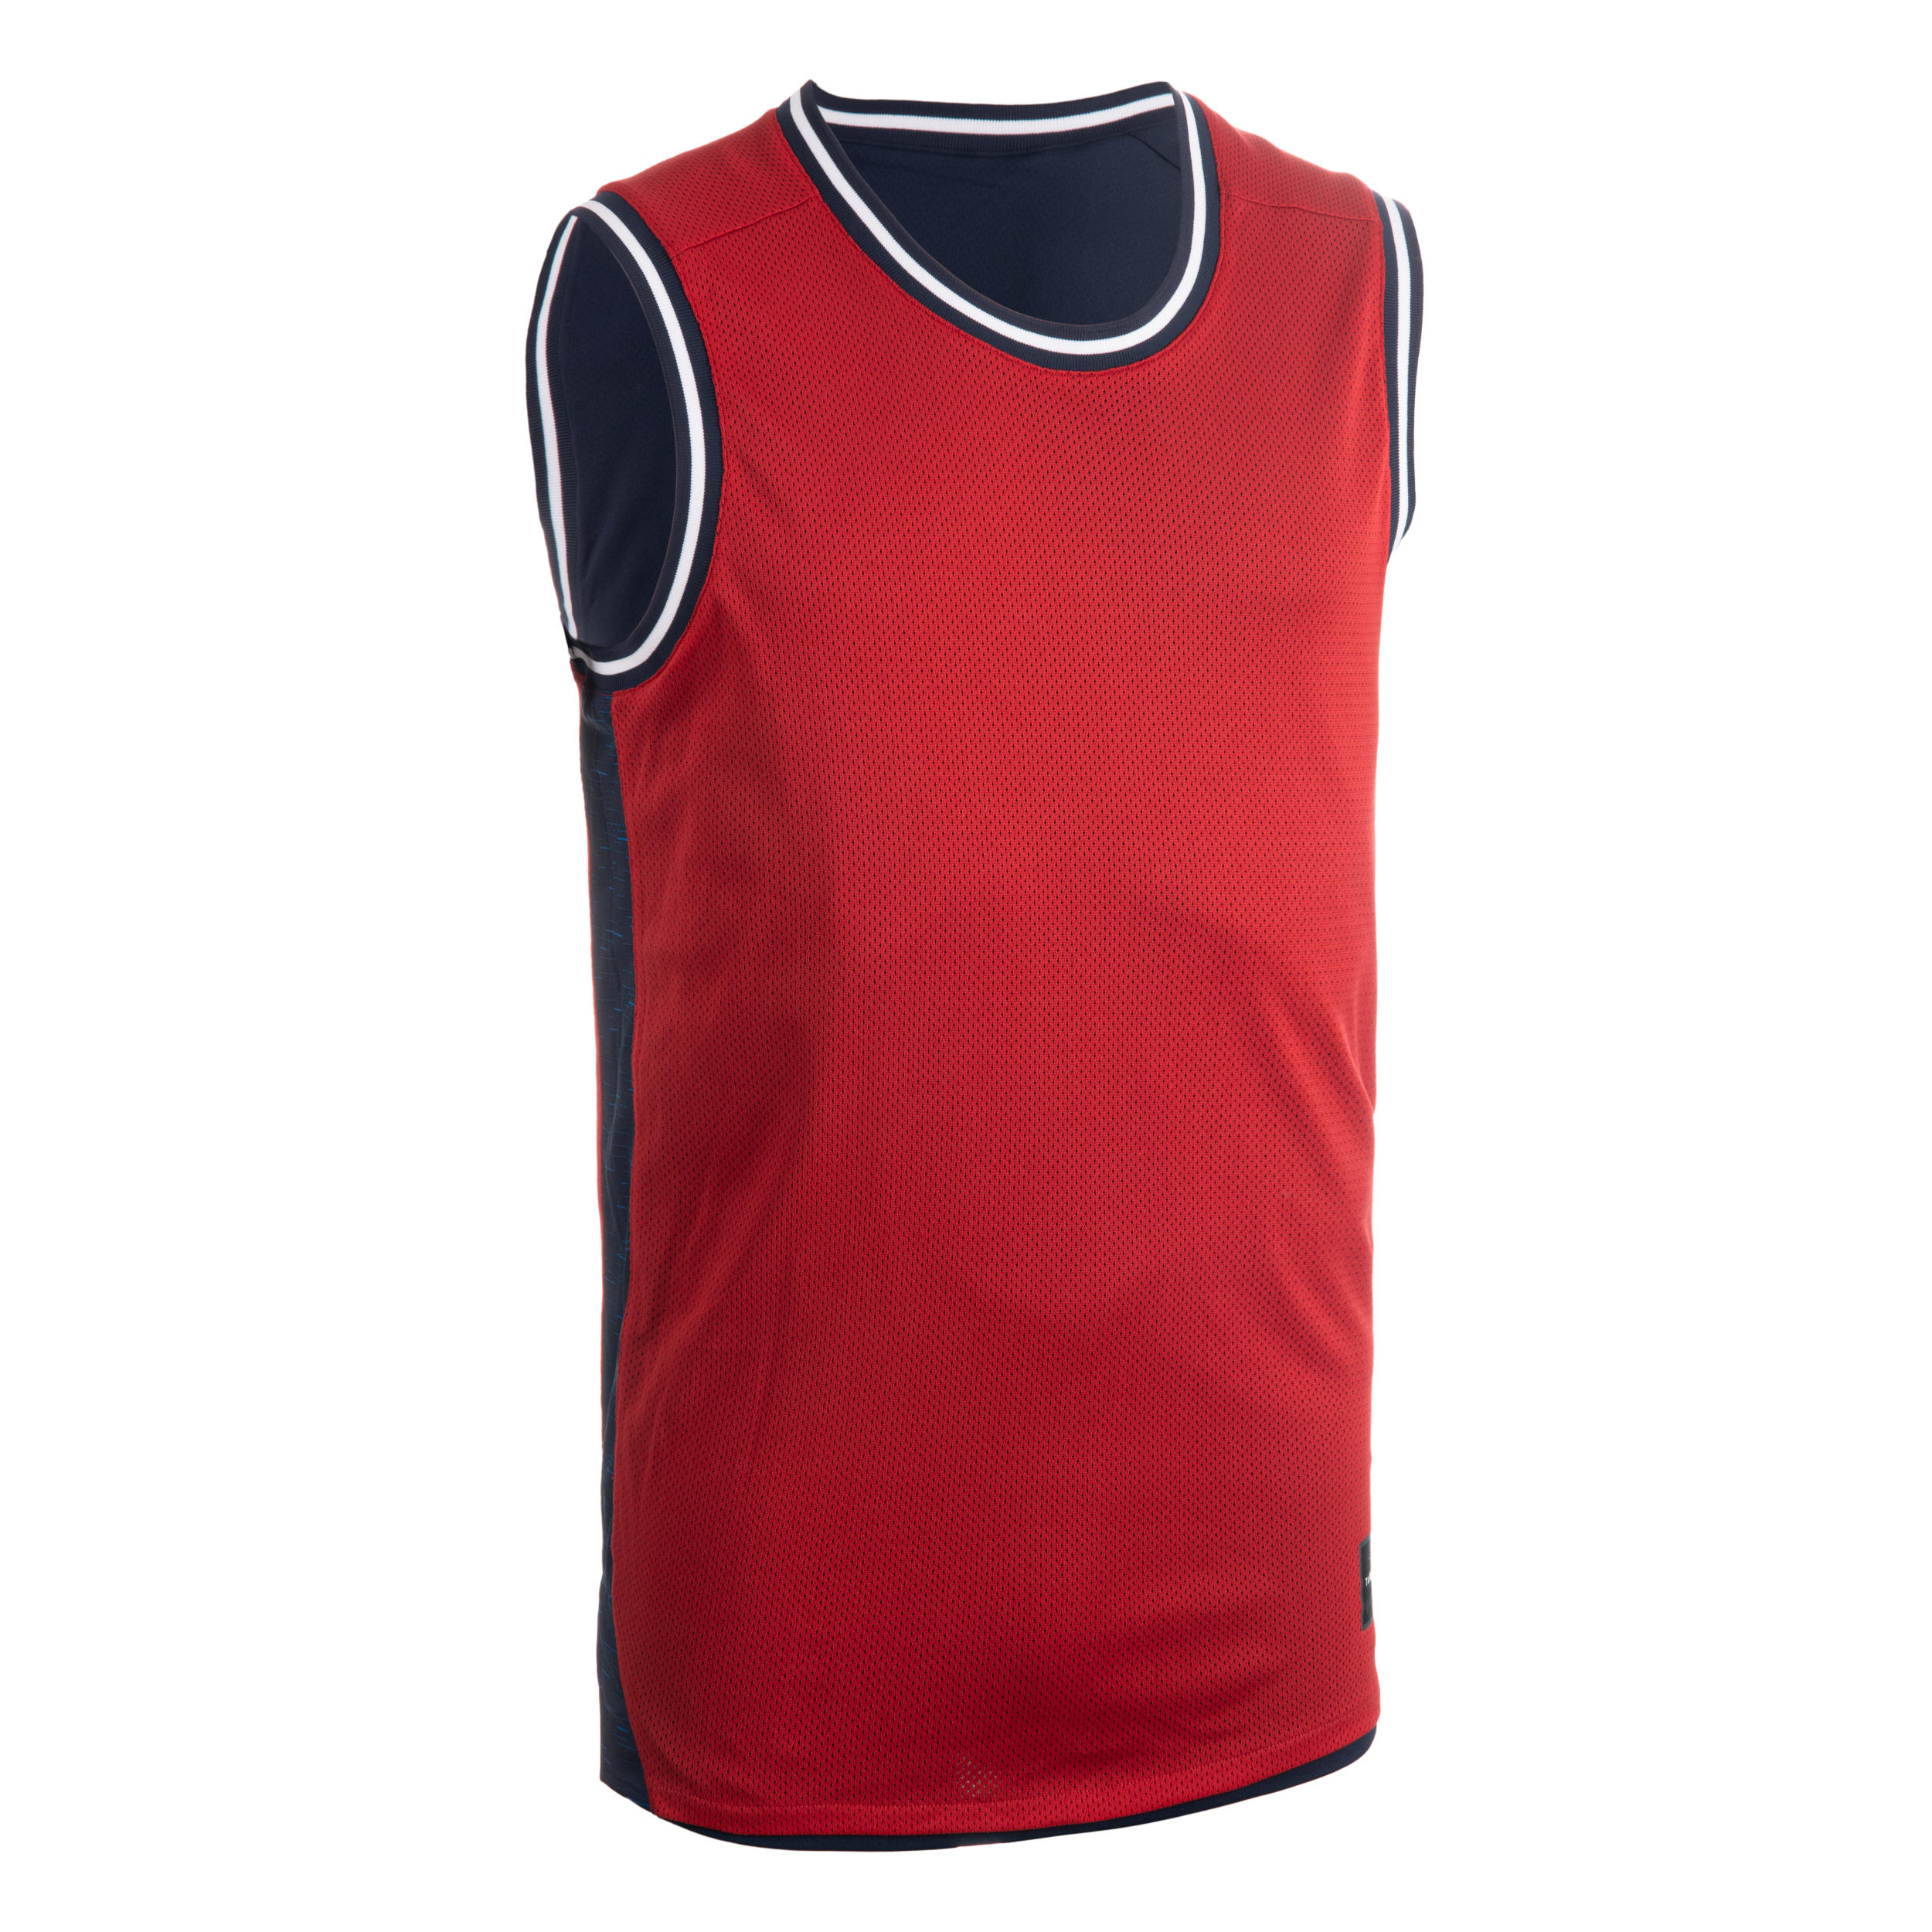 Men's Reversible Sleeveless Basketball Jersey T500R - Blue/Garnet Red 6/7